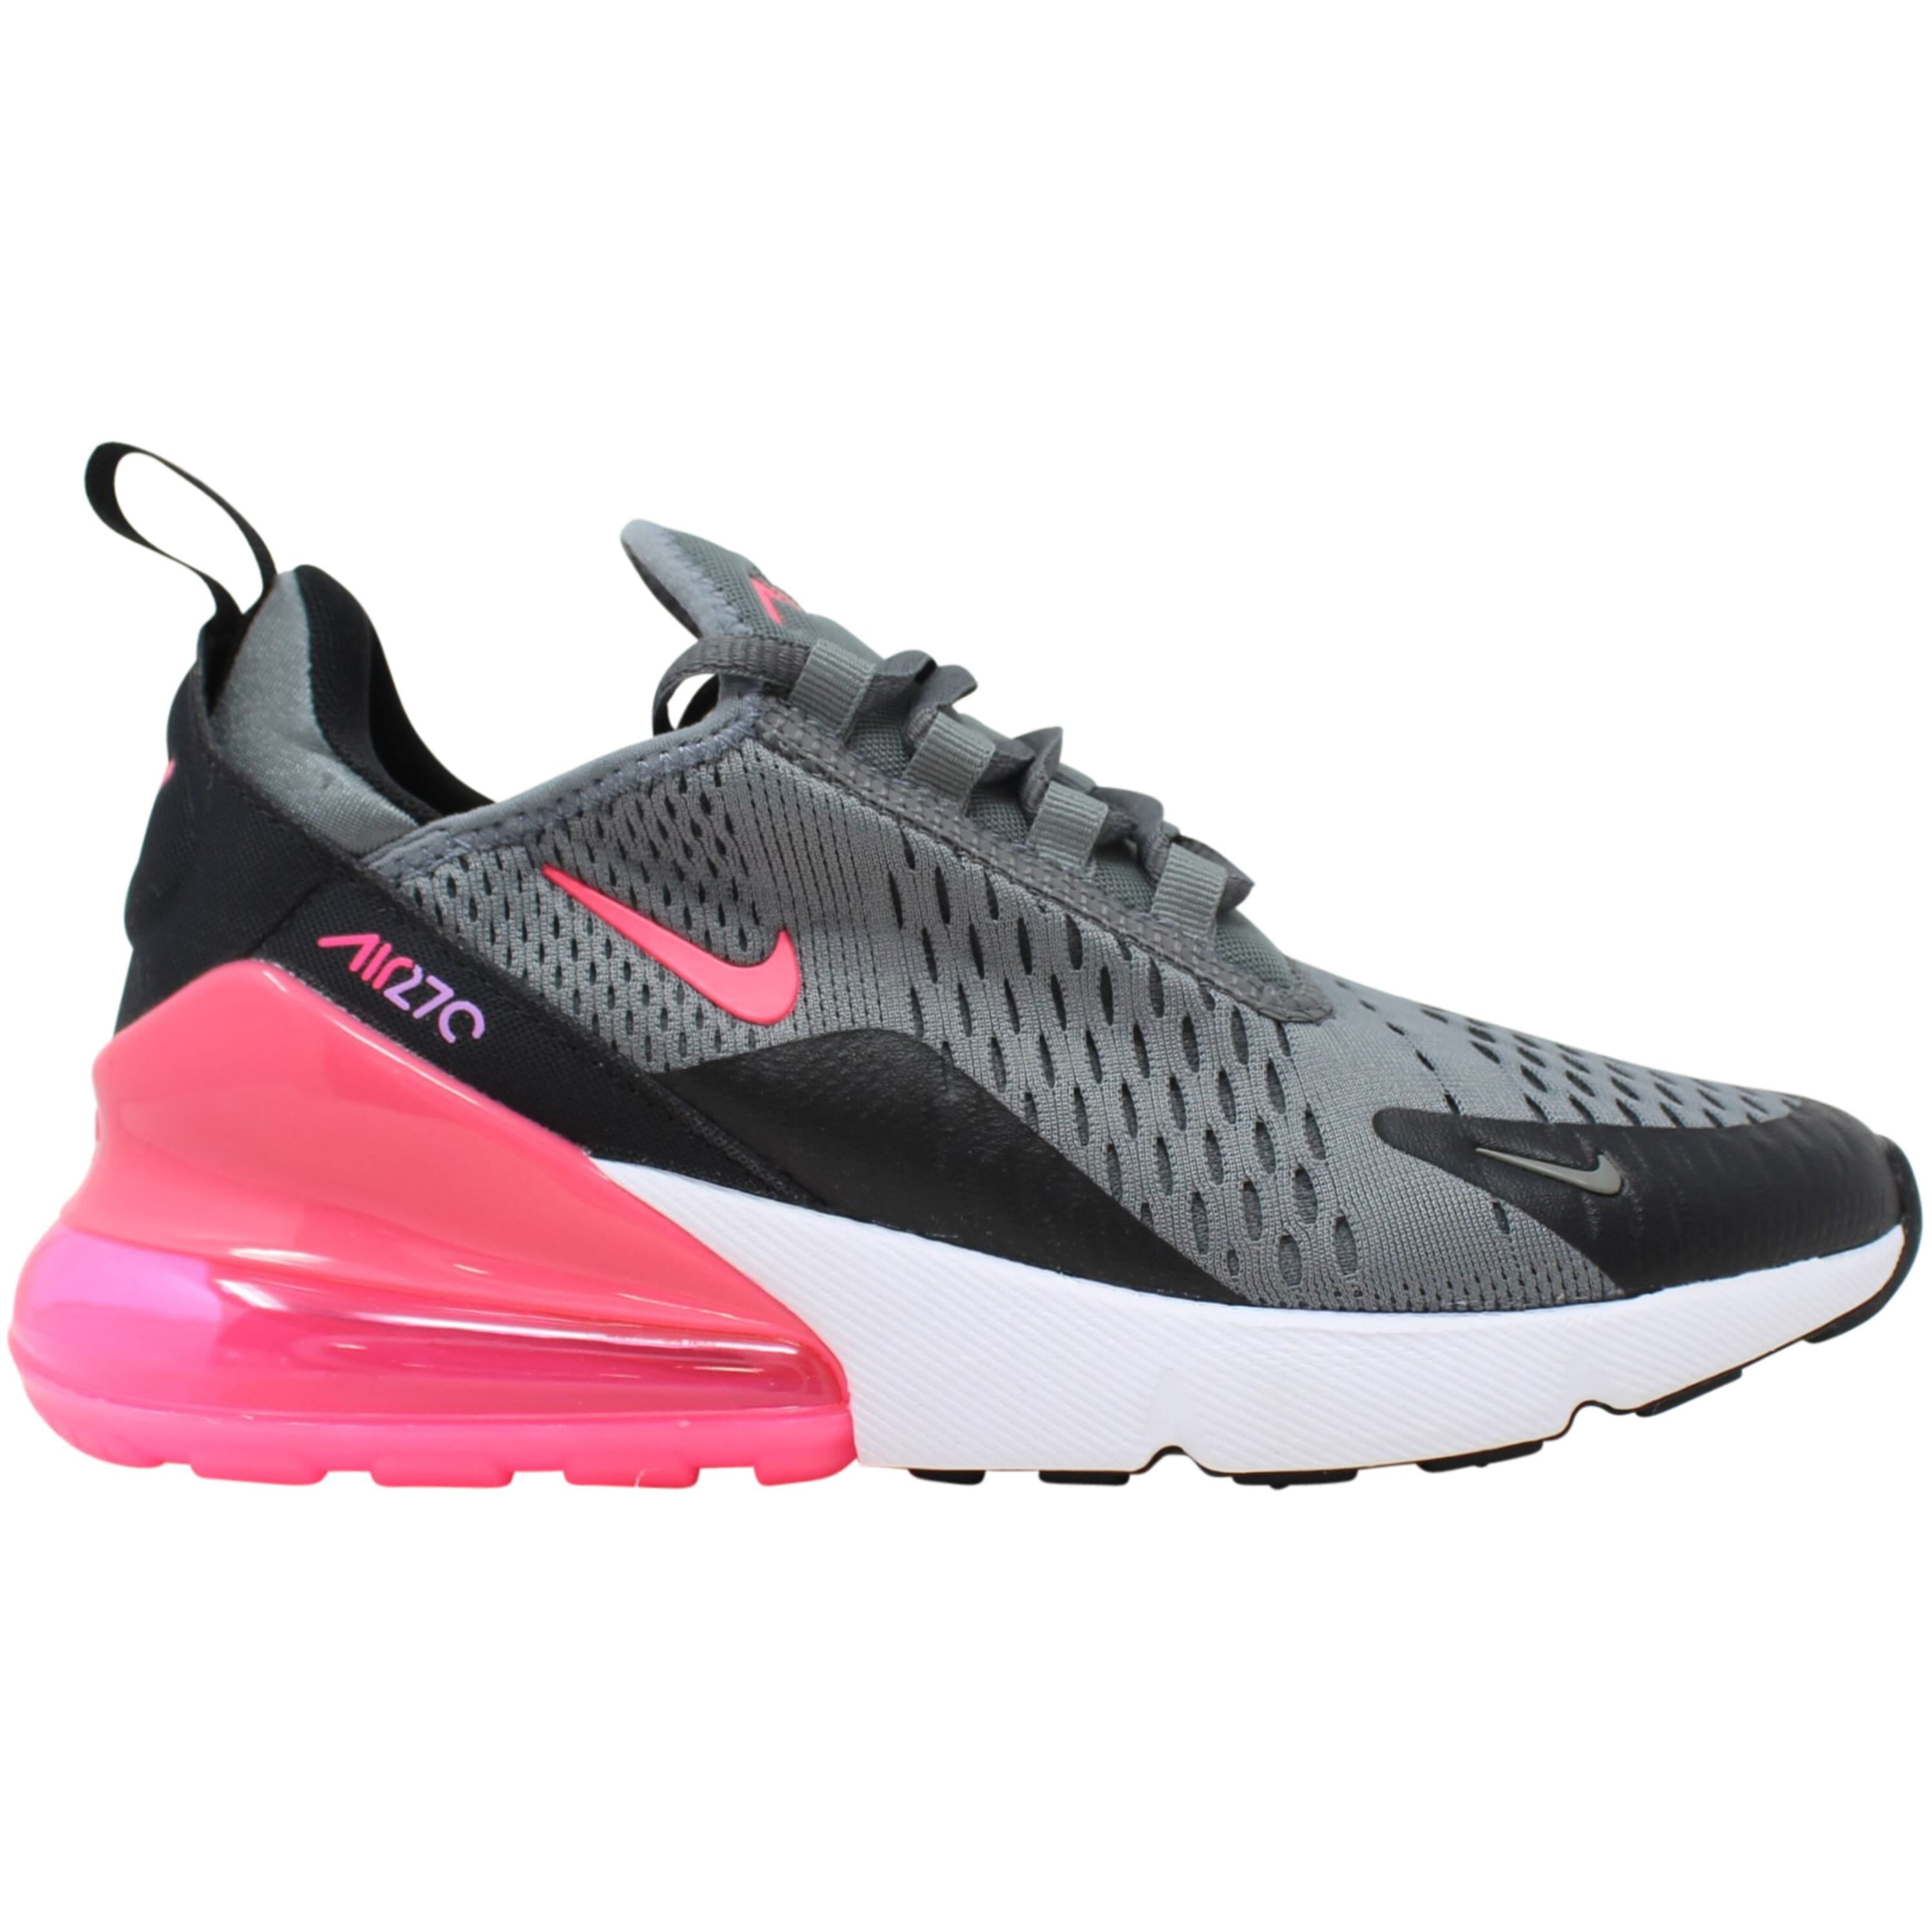 Nike Air Max 270 Smoke Grey/Hyper Pink-Black 943345-031 Grade-School Size 5.5Y Medium -